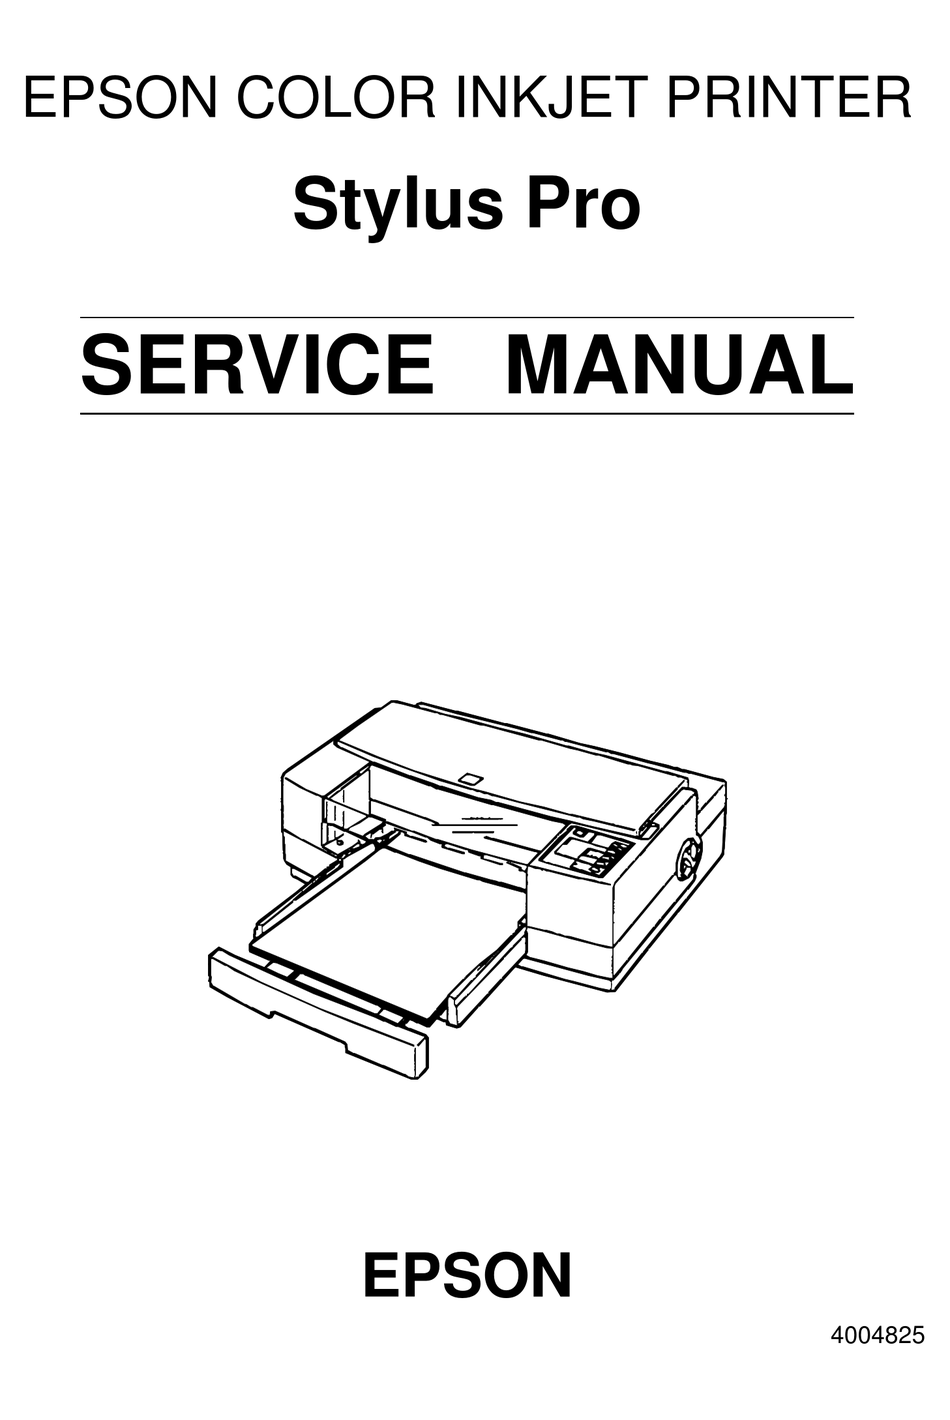 Epson Stylus Pro Service Manual Pdf Download Manualslib 2690